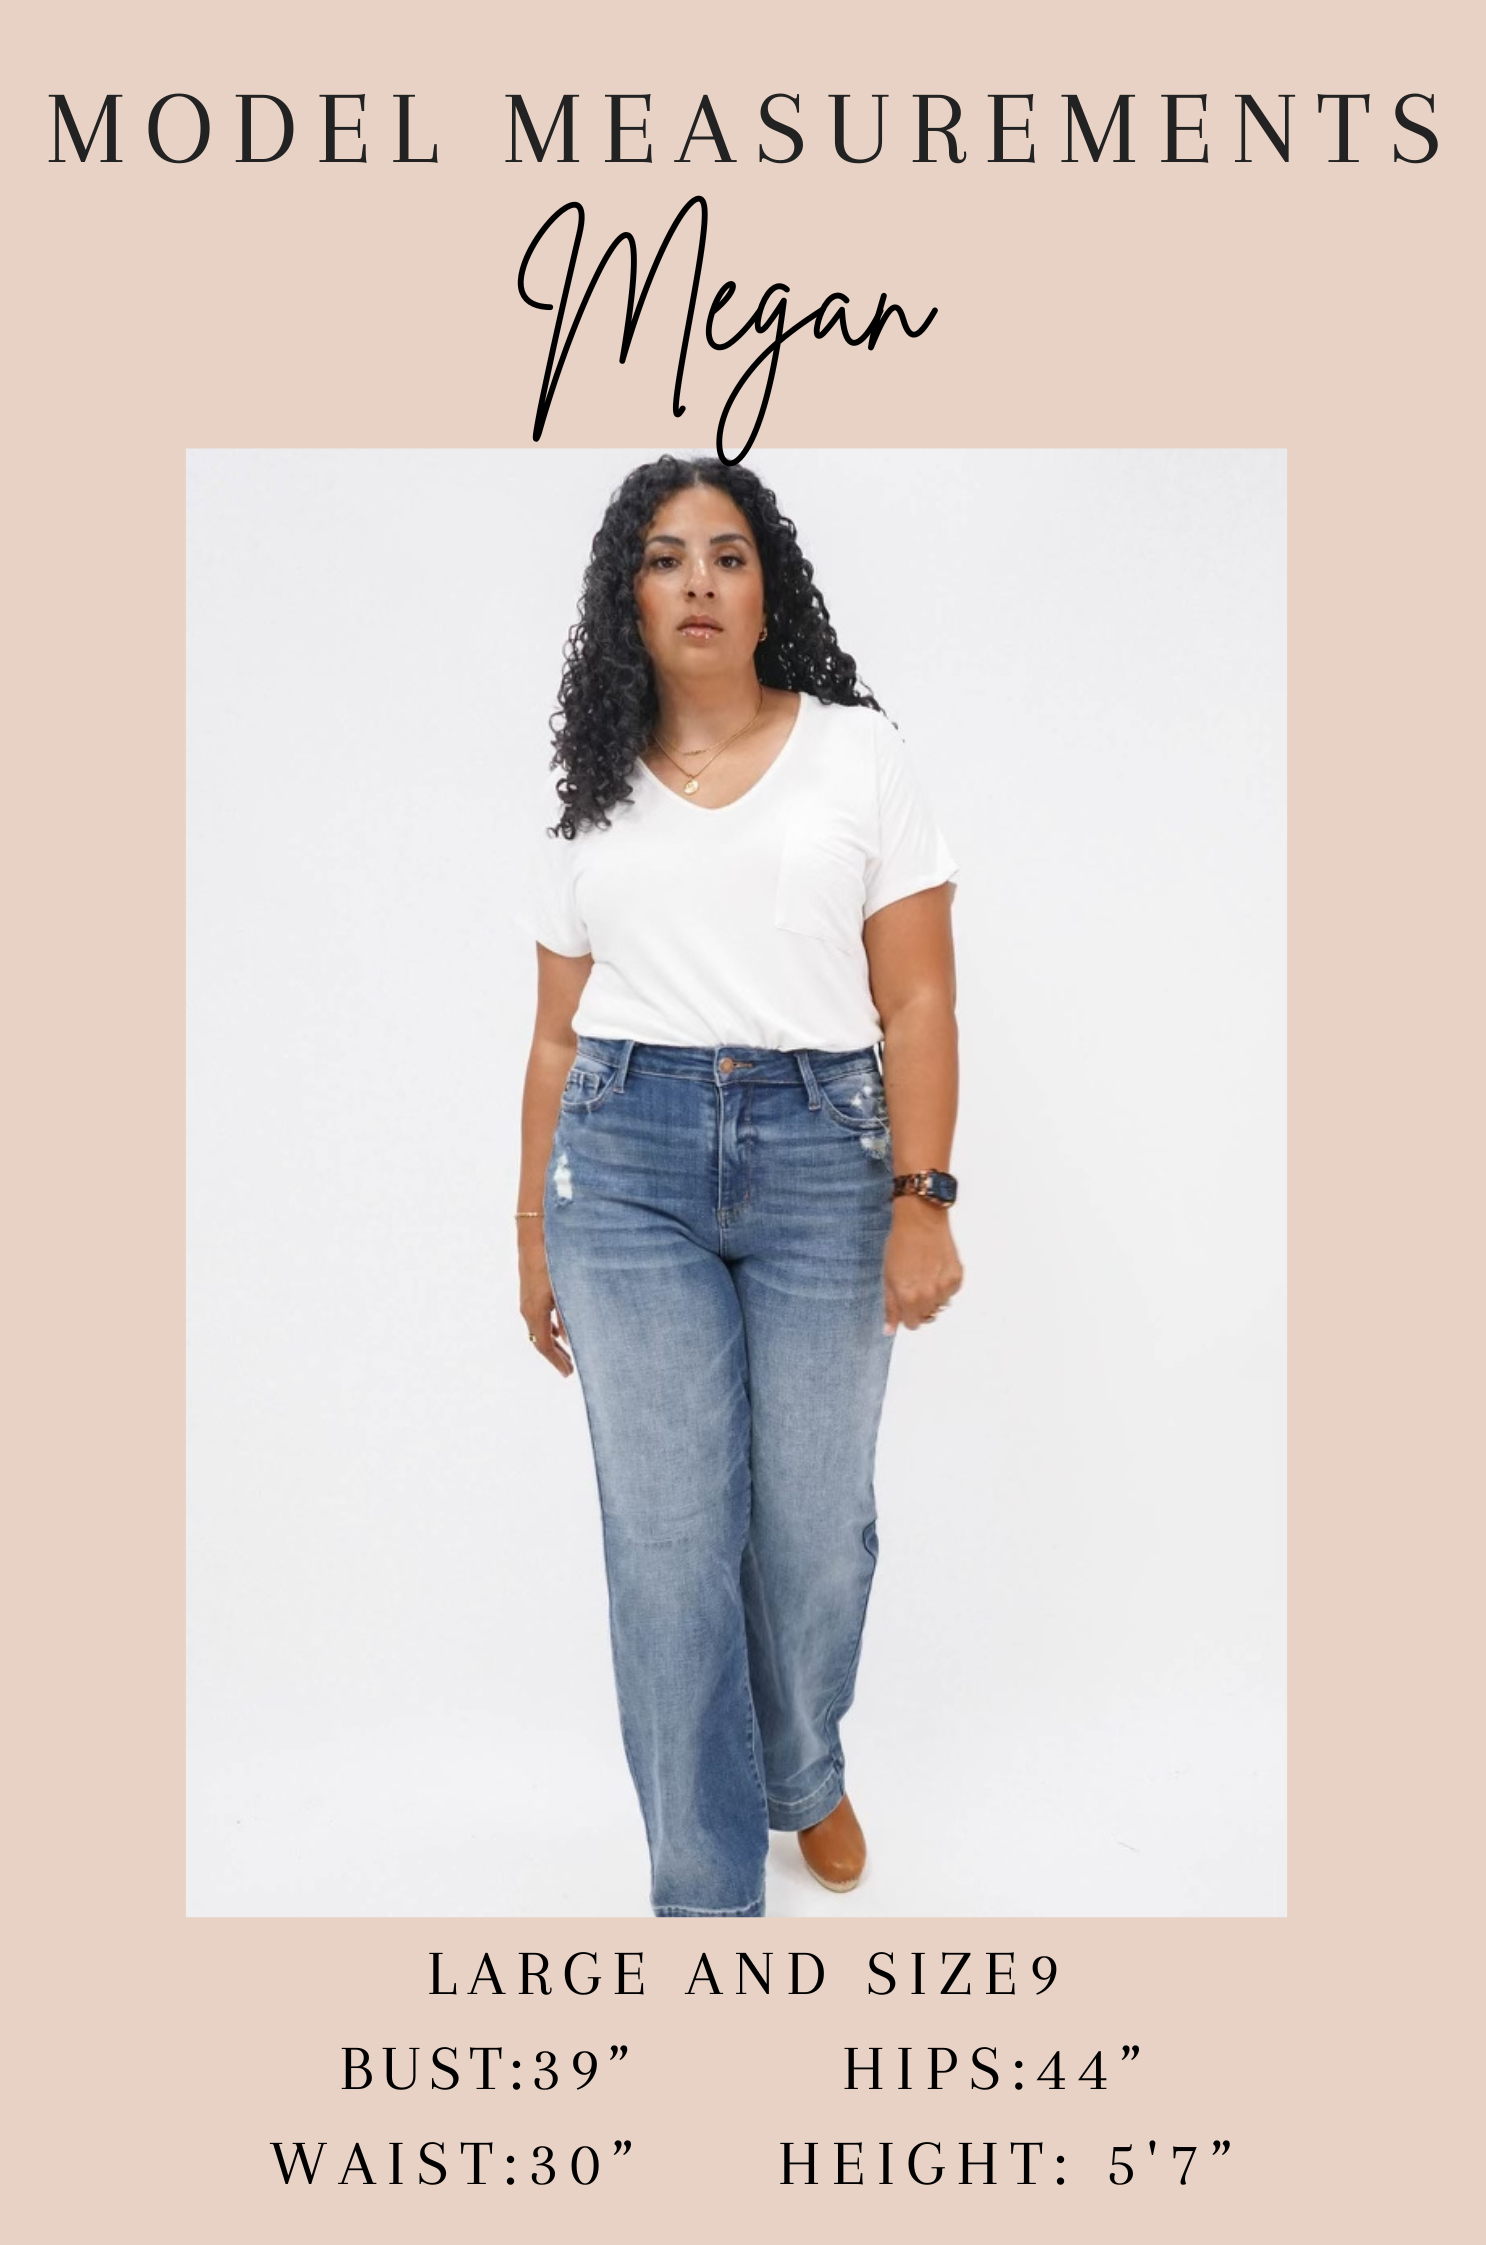 Miranda High Rise Plaid Cuff Vintage Straight Jeans Ave Shops